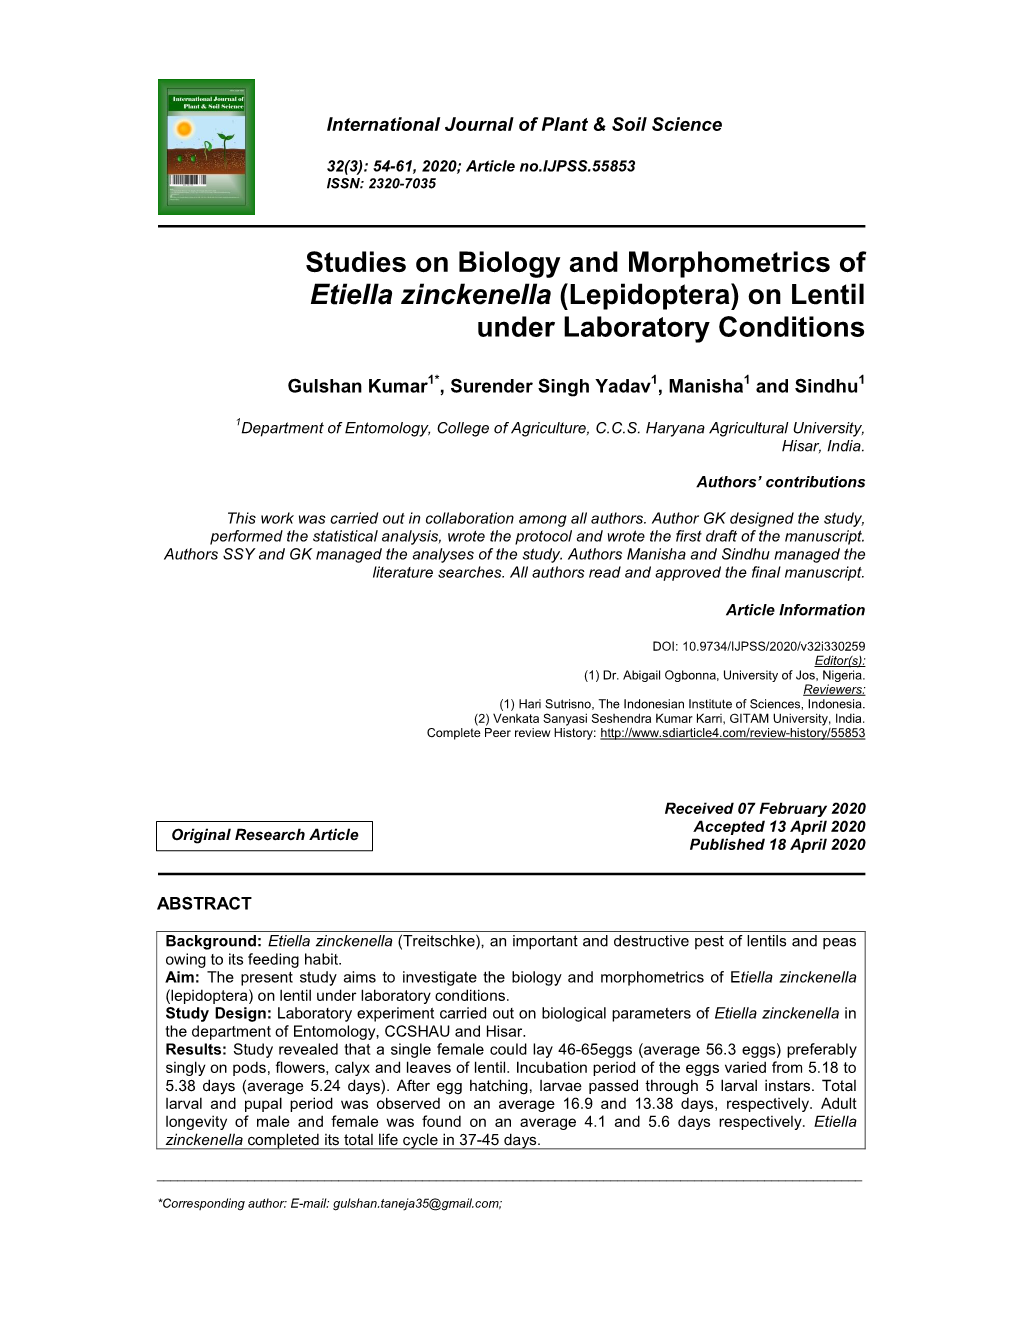 Studies on Biology and Morphometrics of Etiella Zinckenella (Lepidoptera) on Lentil Under Laboratory Conditions